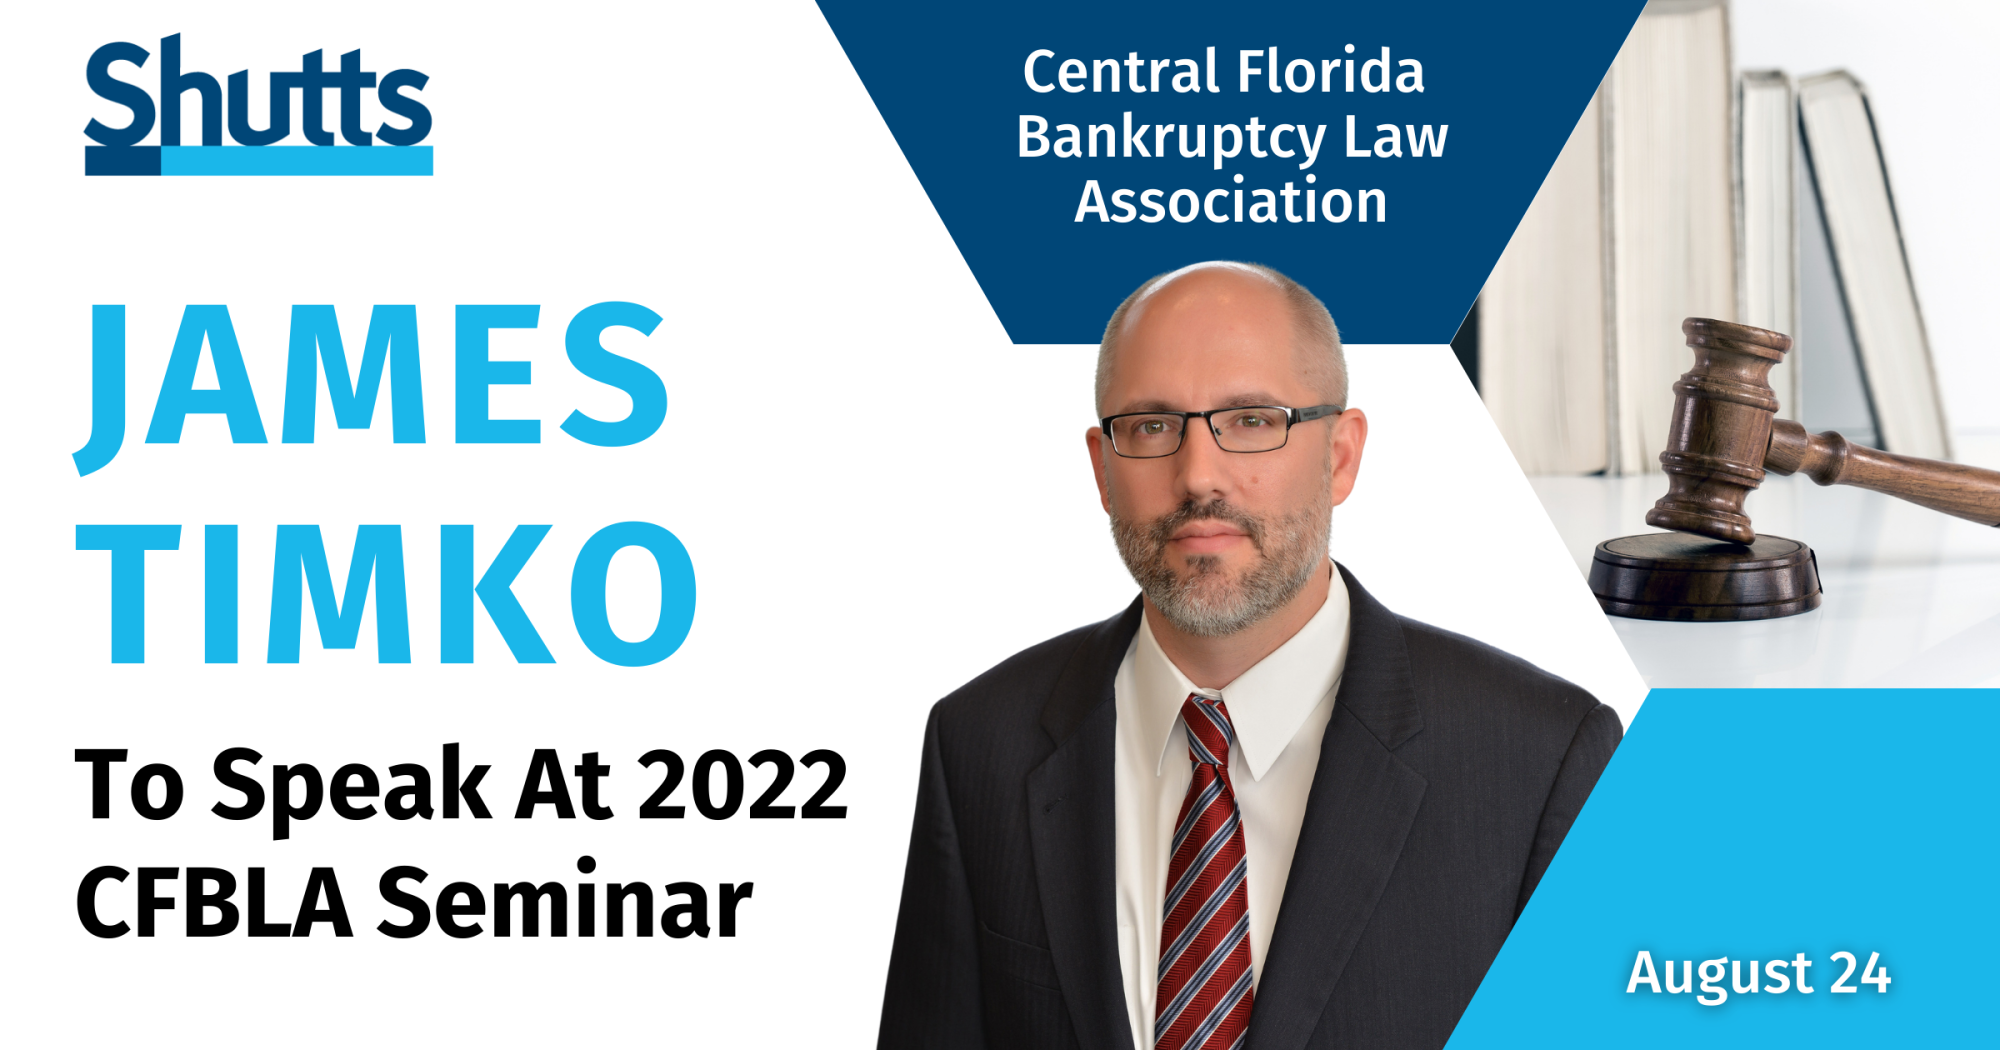 James Timko To Speak at 2022 CFBLA Seminar